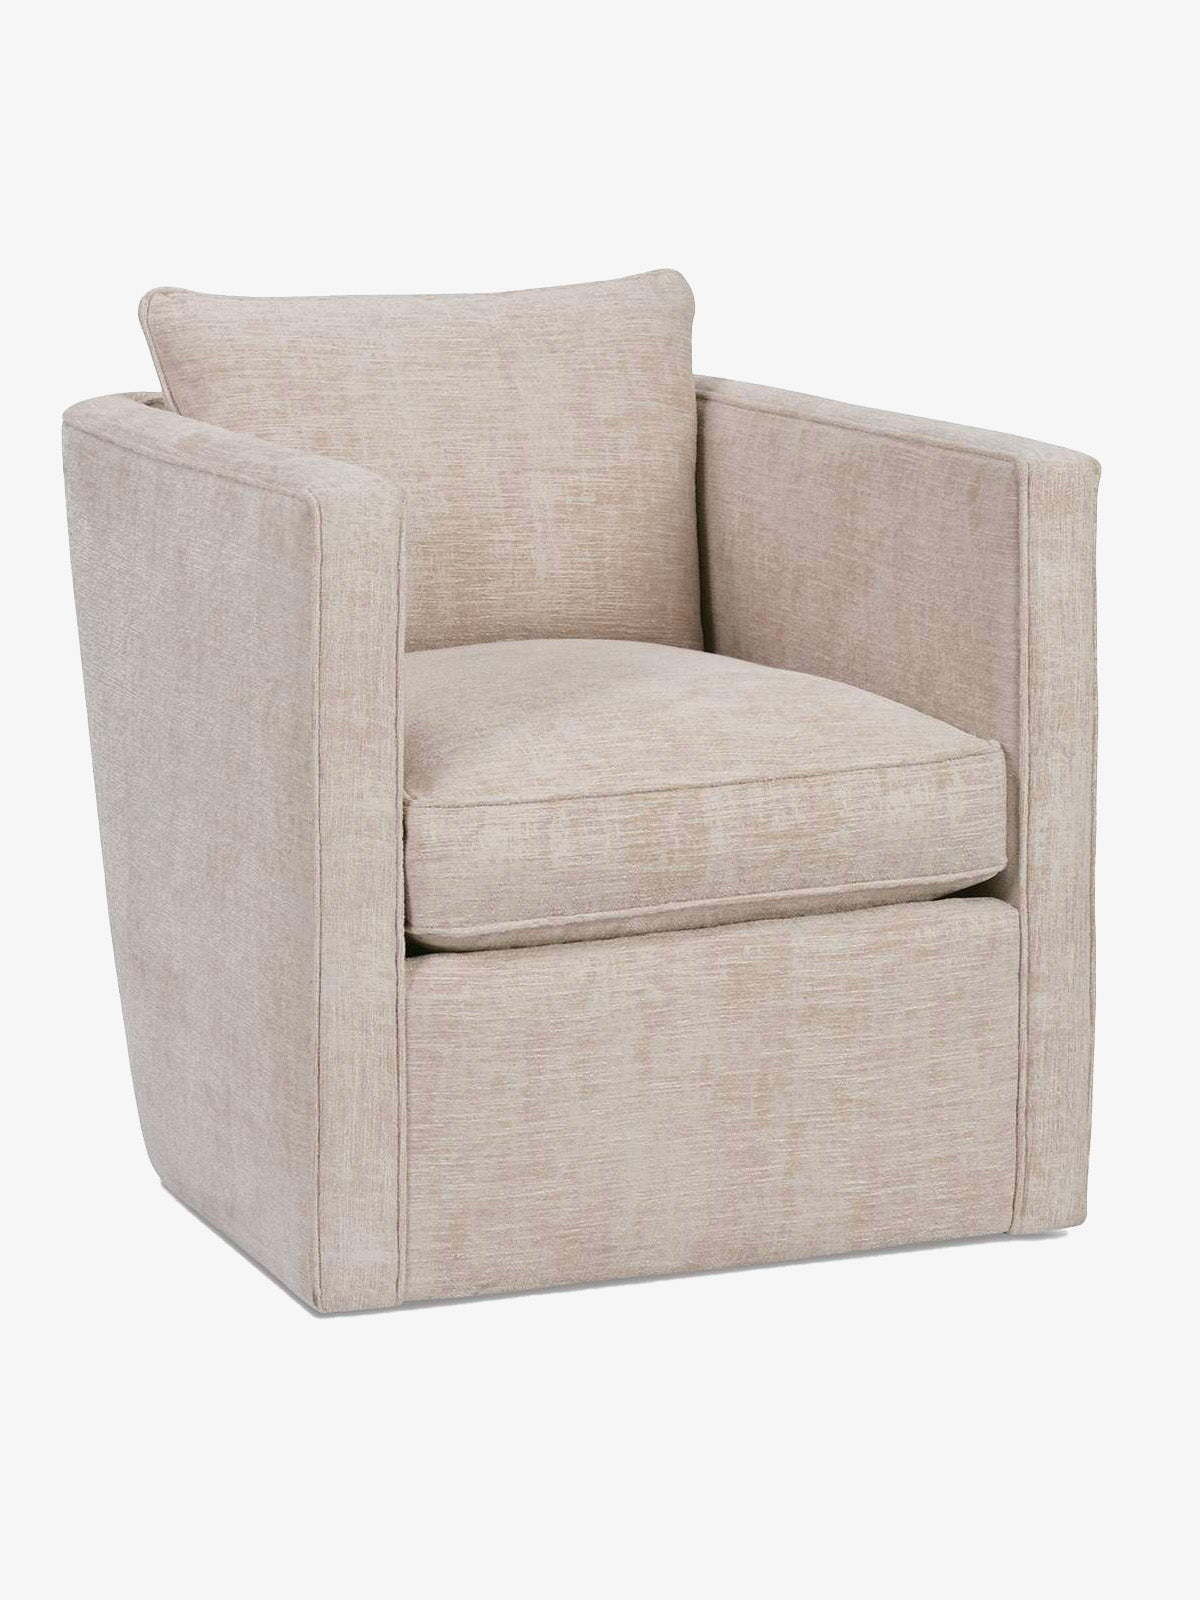 Rothko Chair